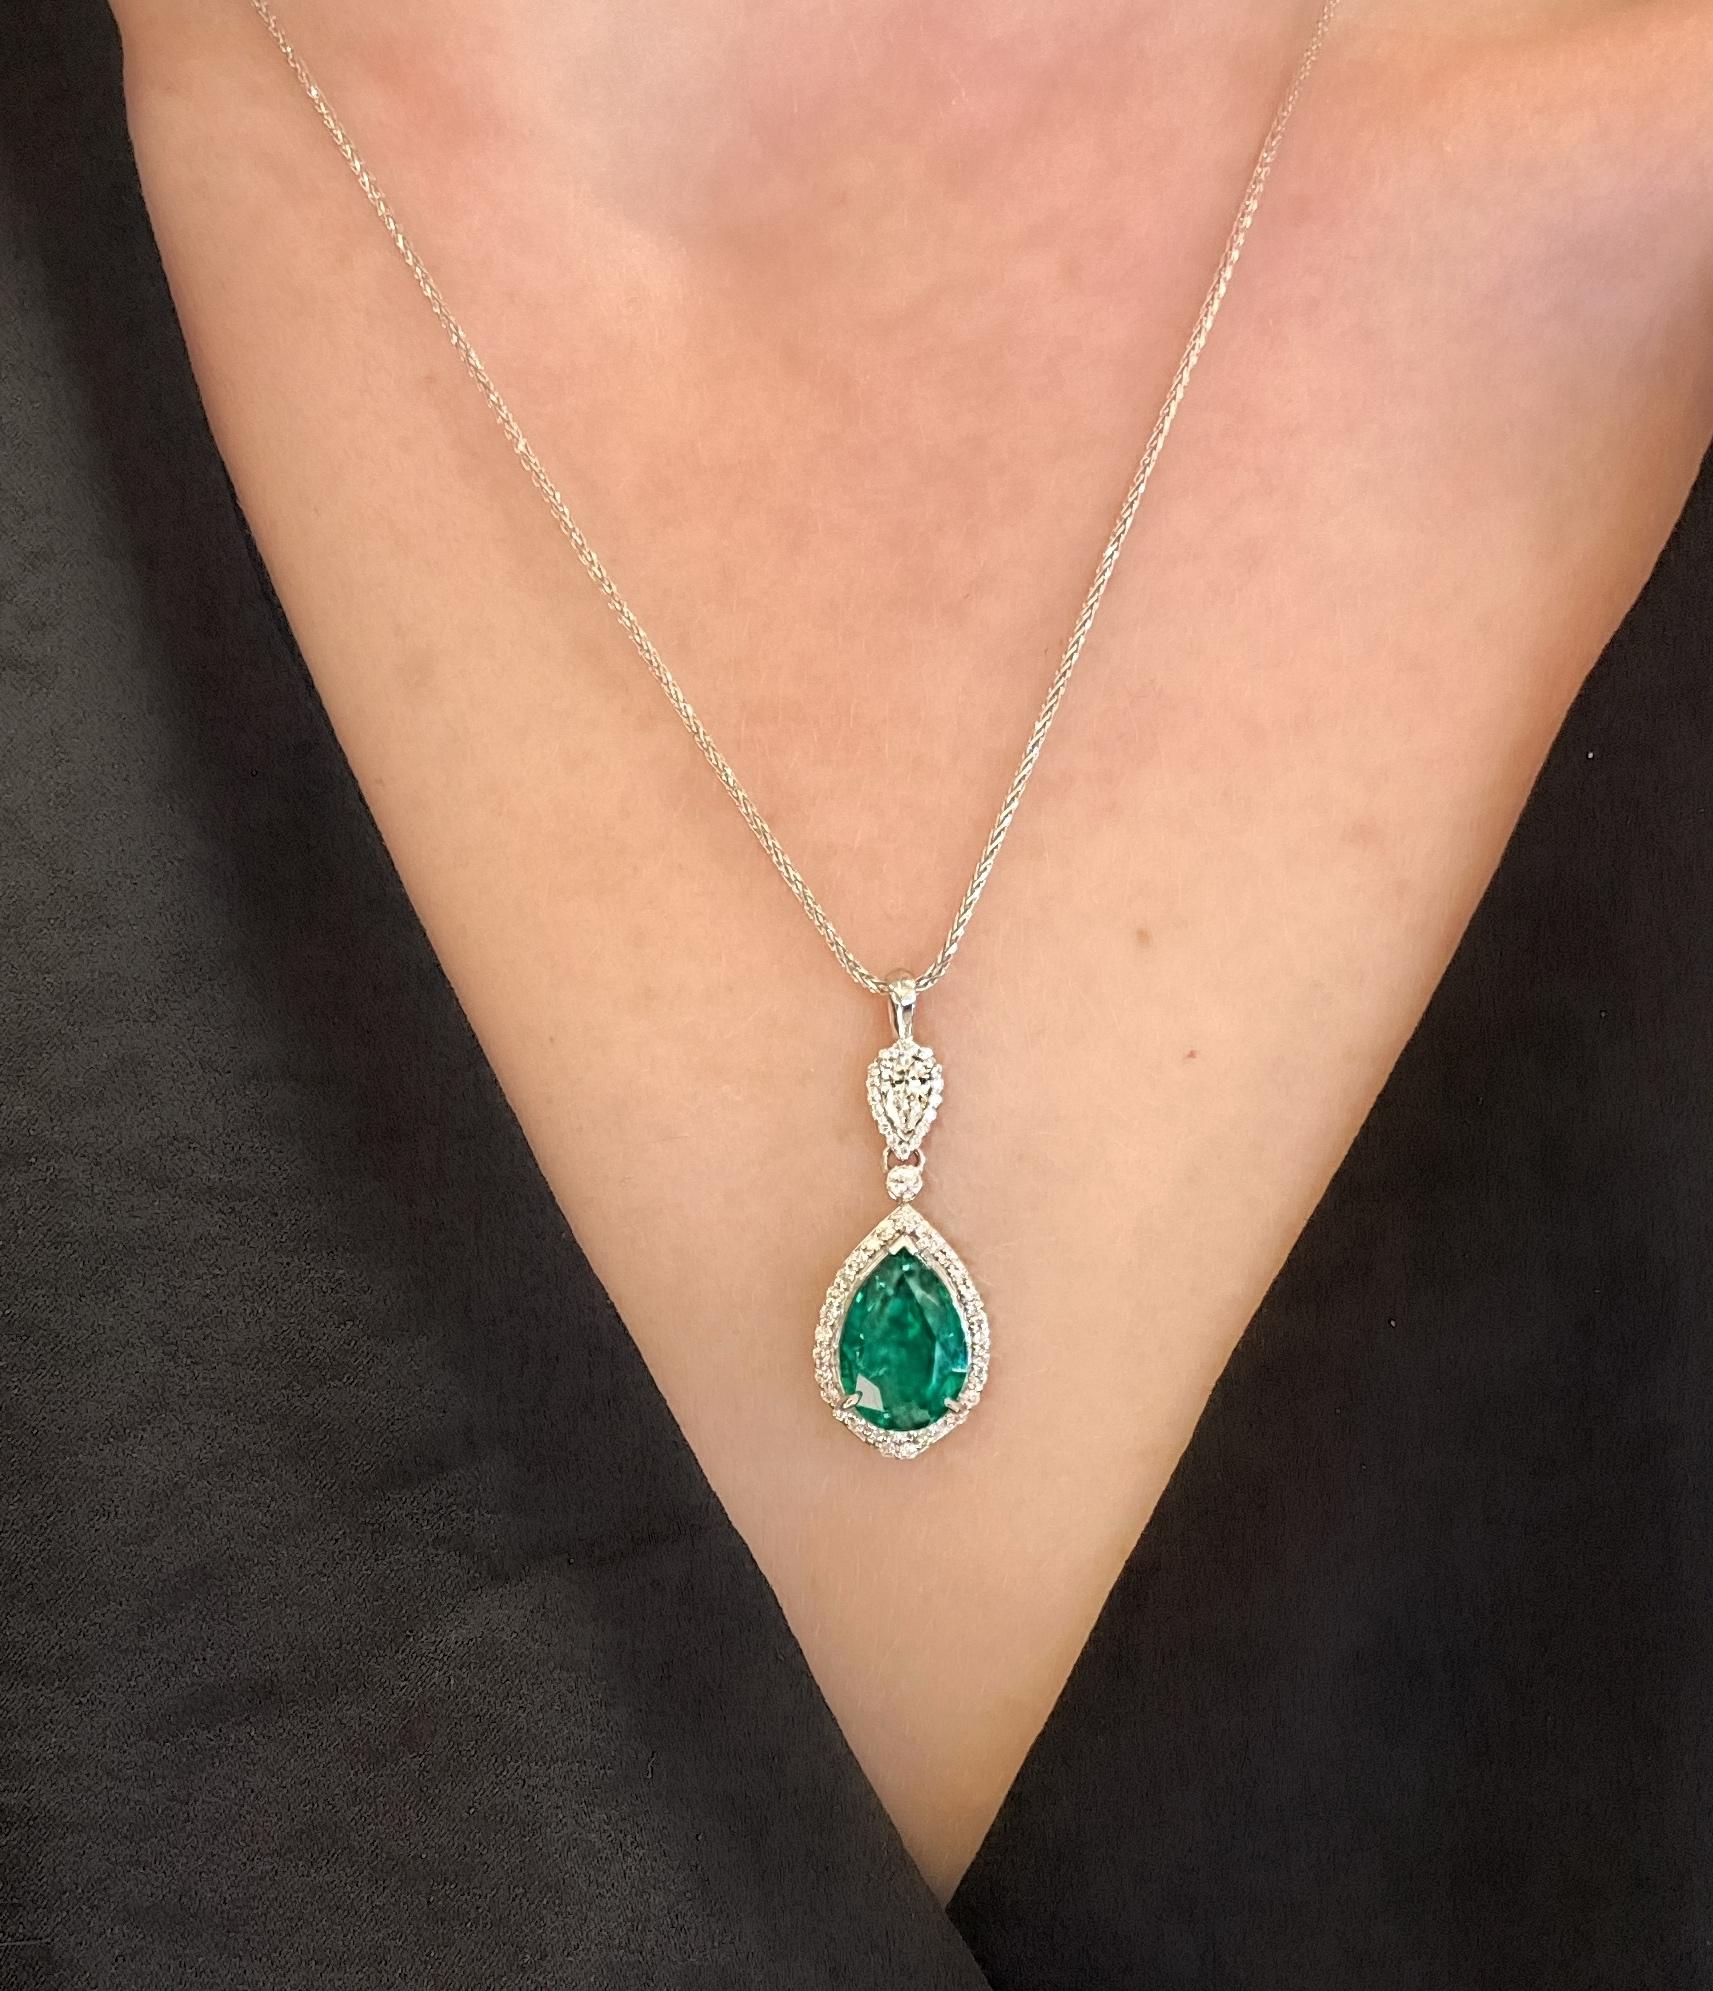 3.71 Carat Pear Shaped Emerald & Diamonds Pendant in 18K White Gold 2